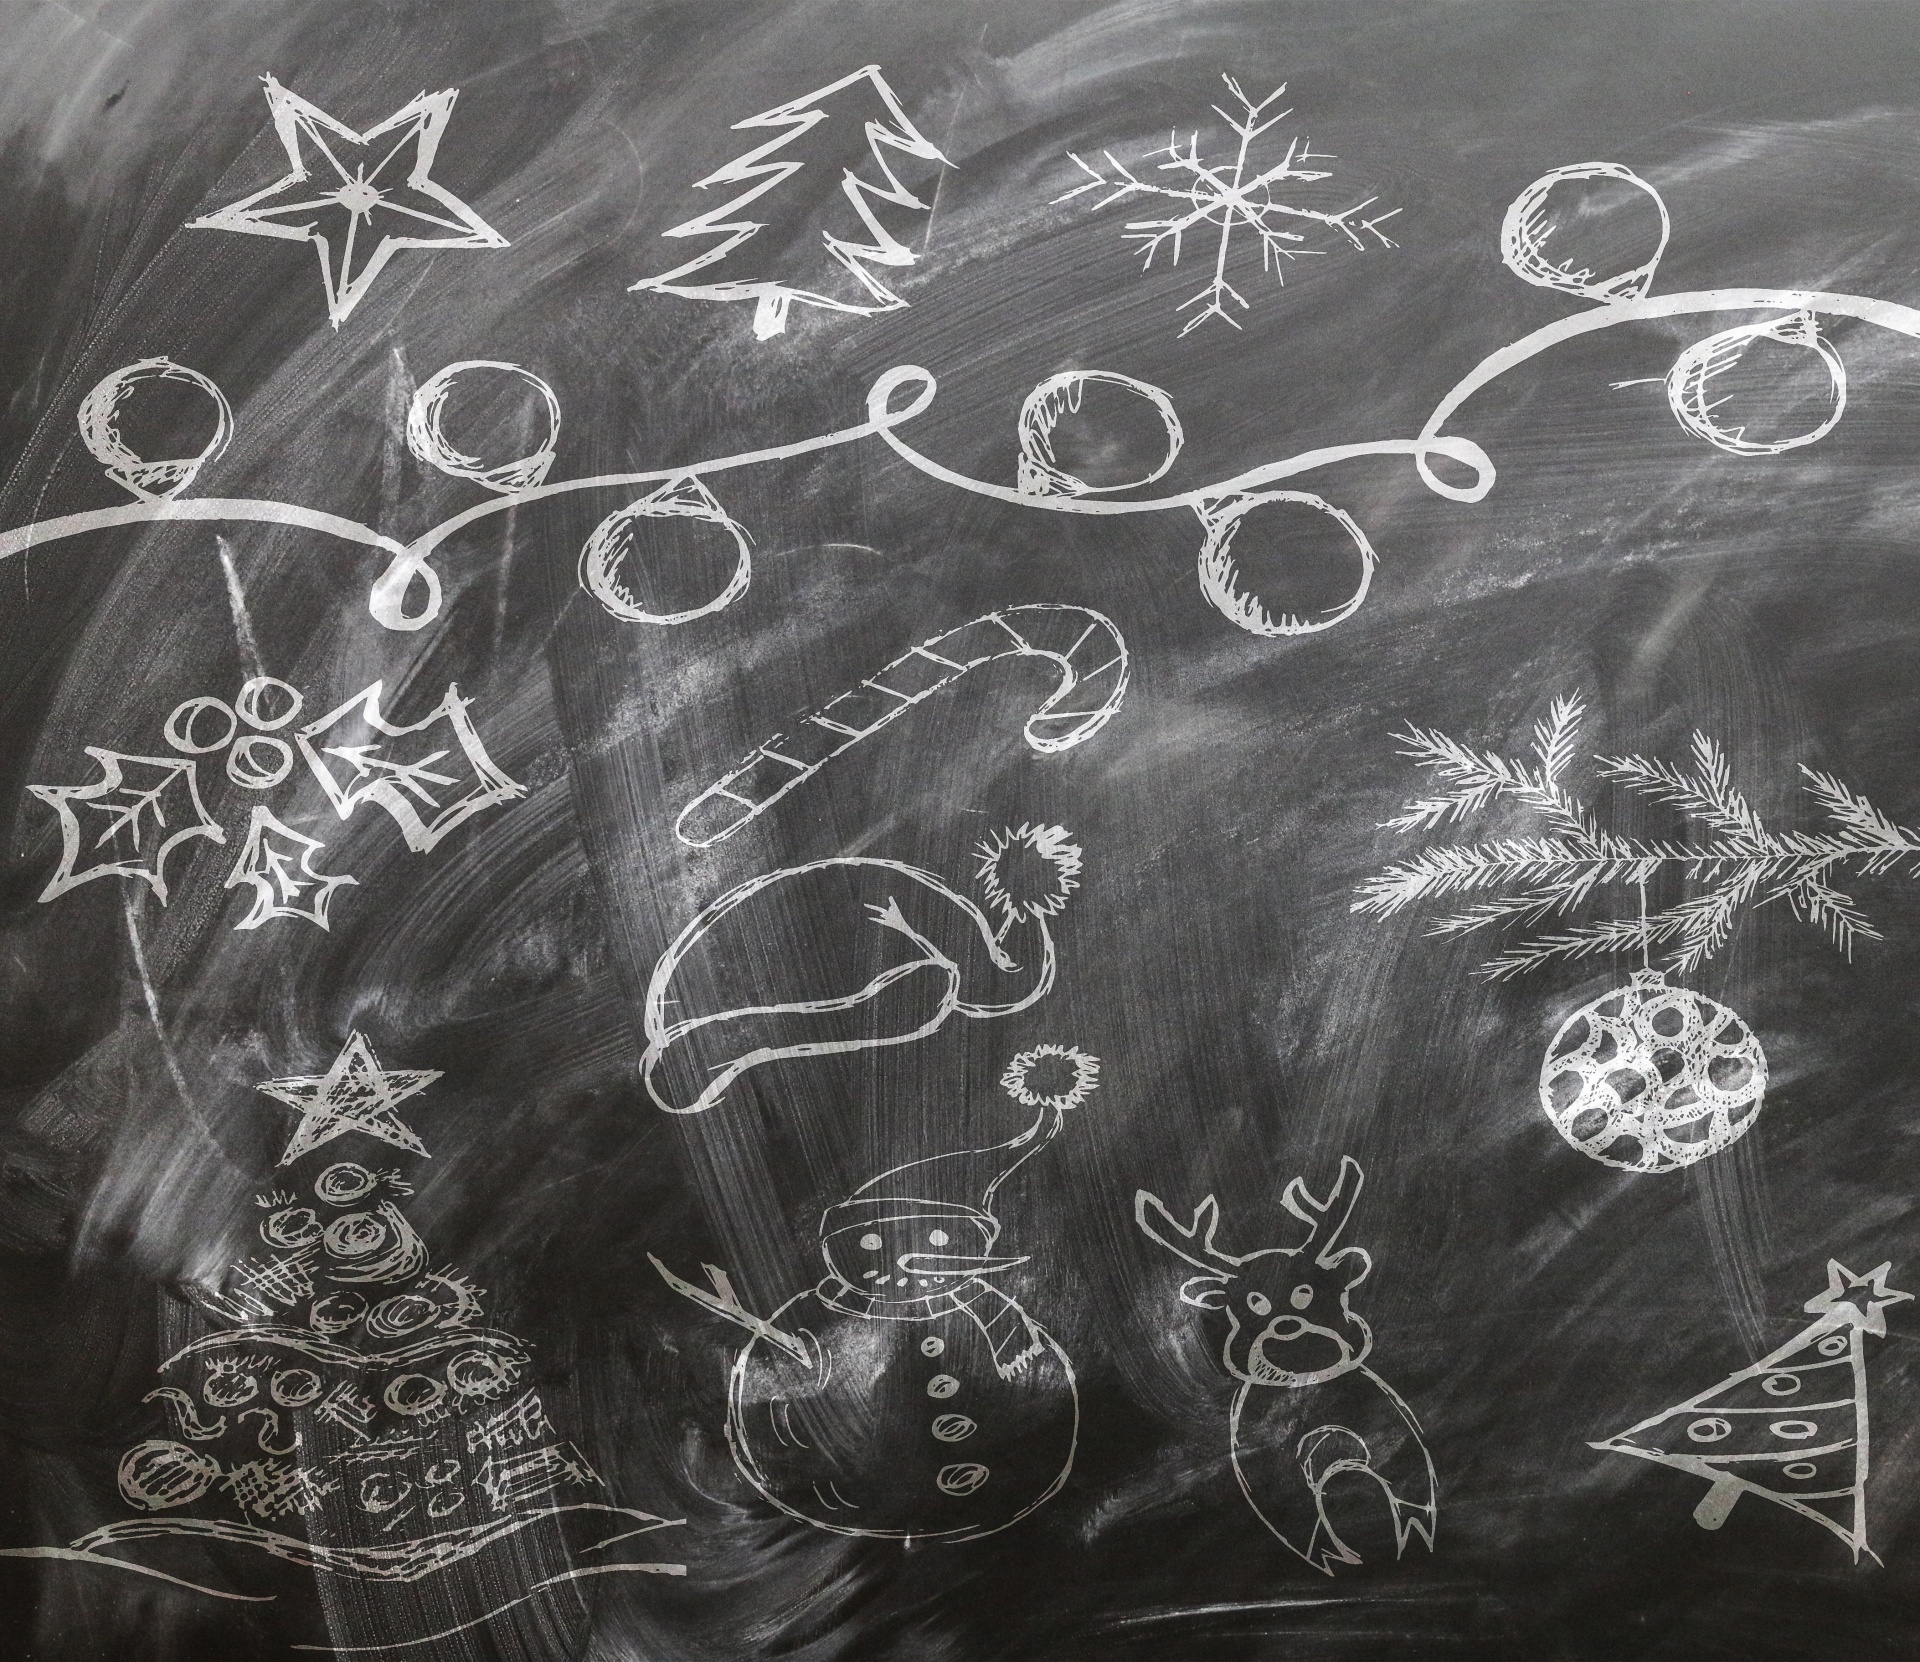 Blackboard while white chalk doodles